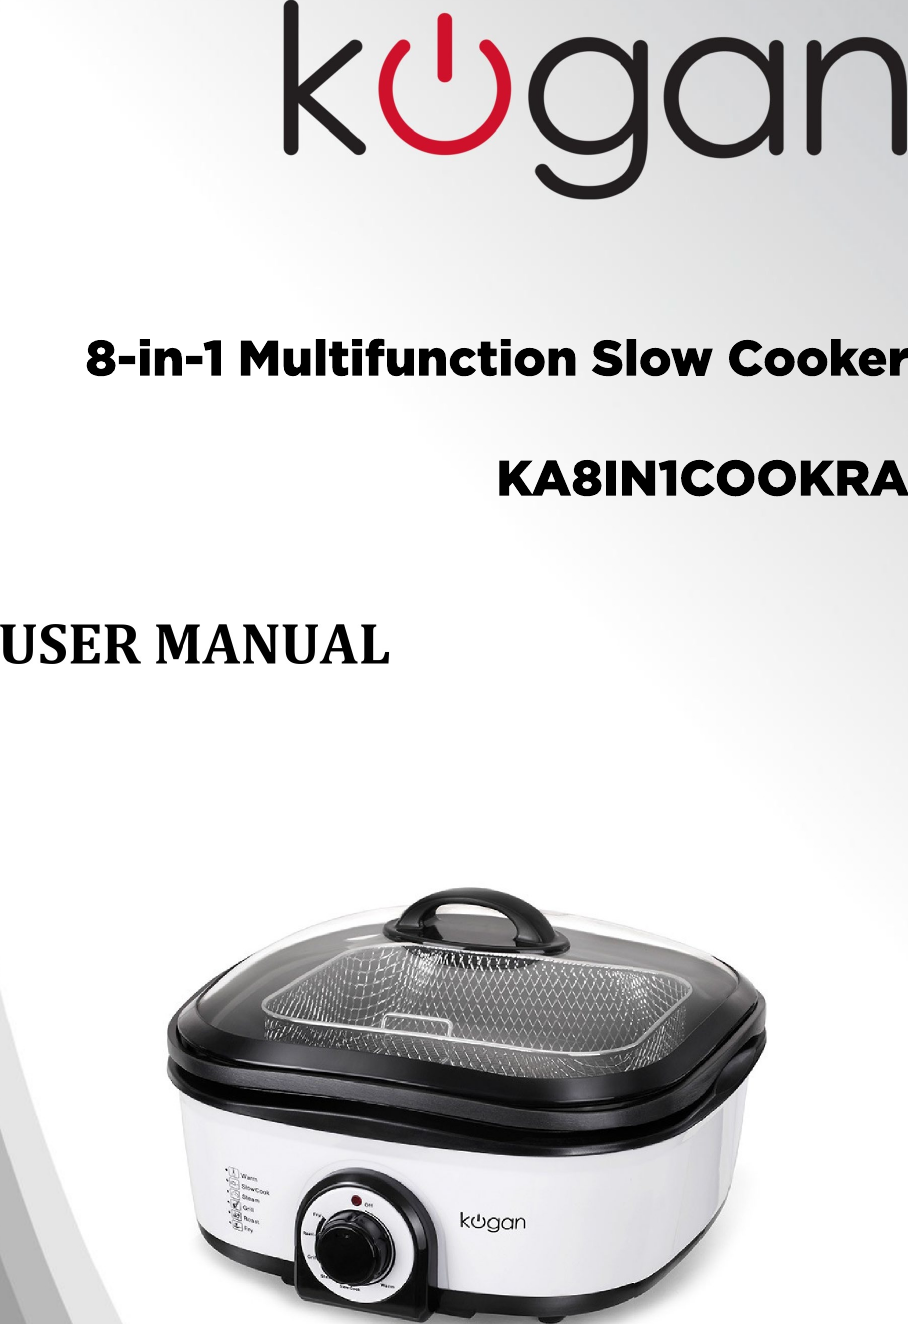 Page 1 of 4 - KA8IN1COOKRA - Kogan 8-in-1 Multifunction Slow Cooker  KA8IN1COOKRA-A